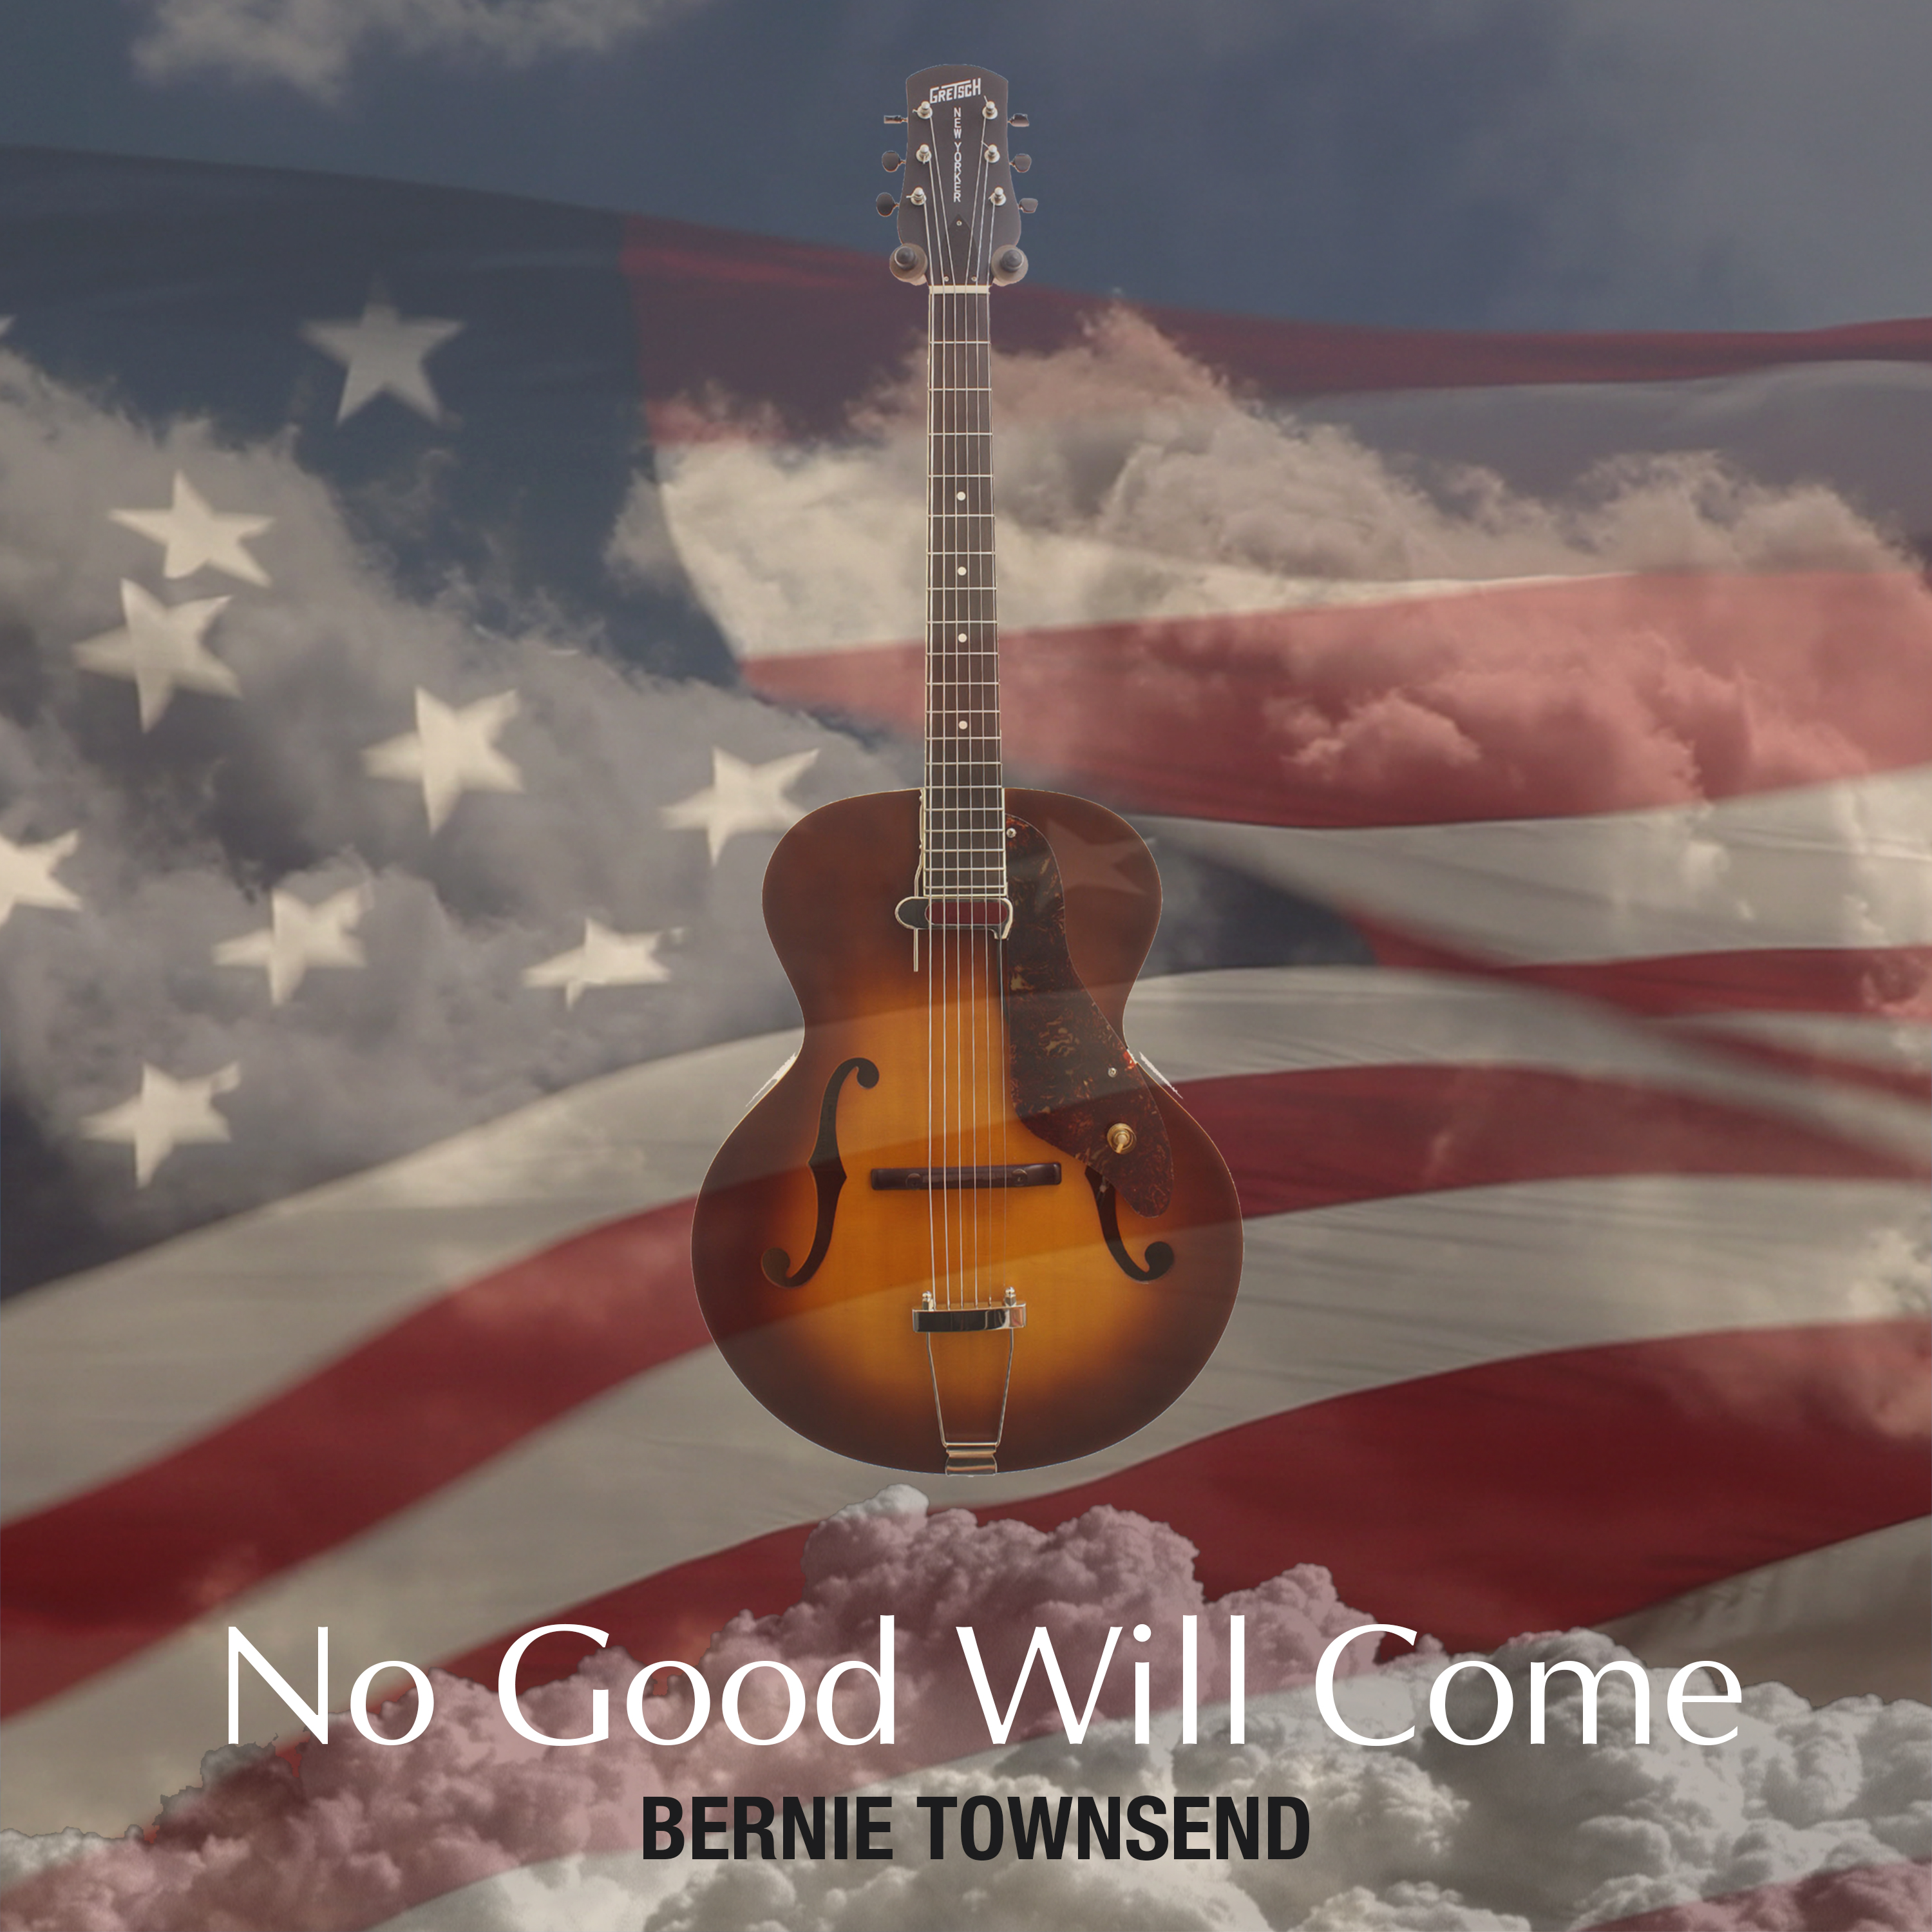 No Good Will Come - Bernie Townsend - Cover Art